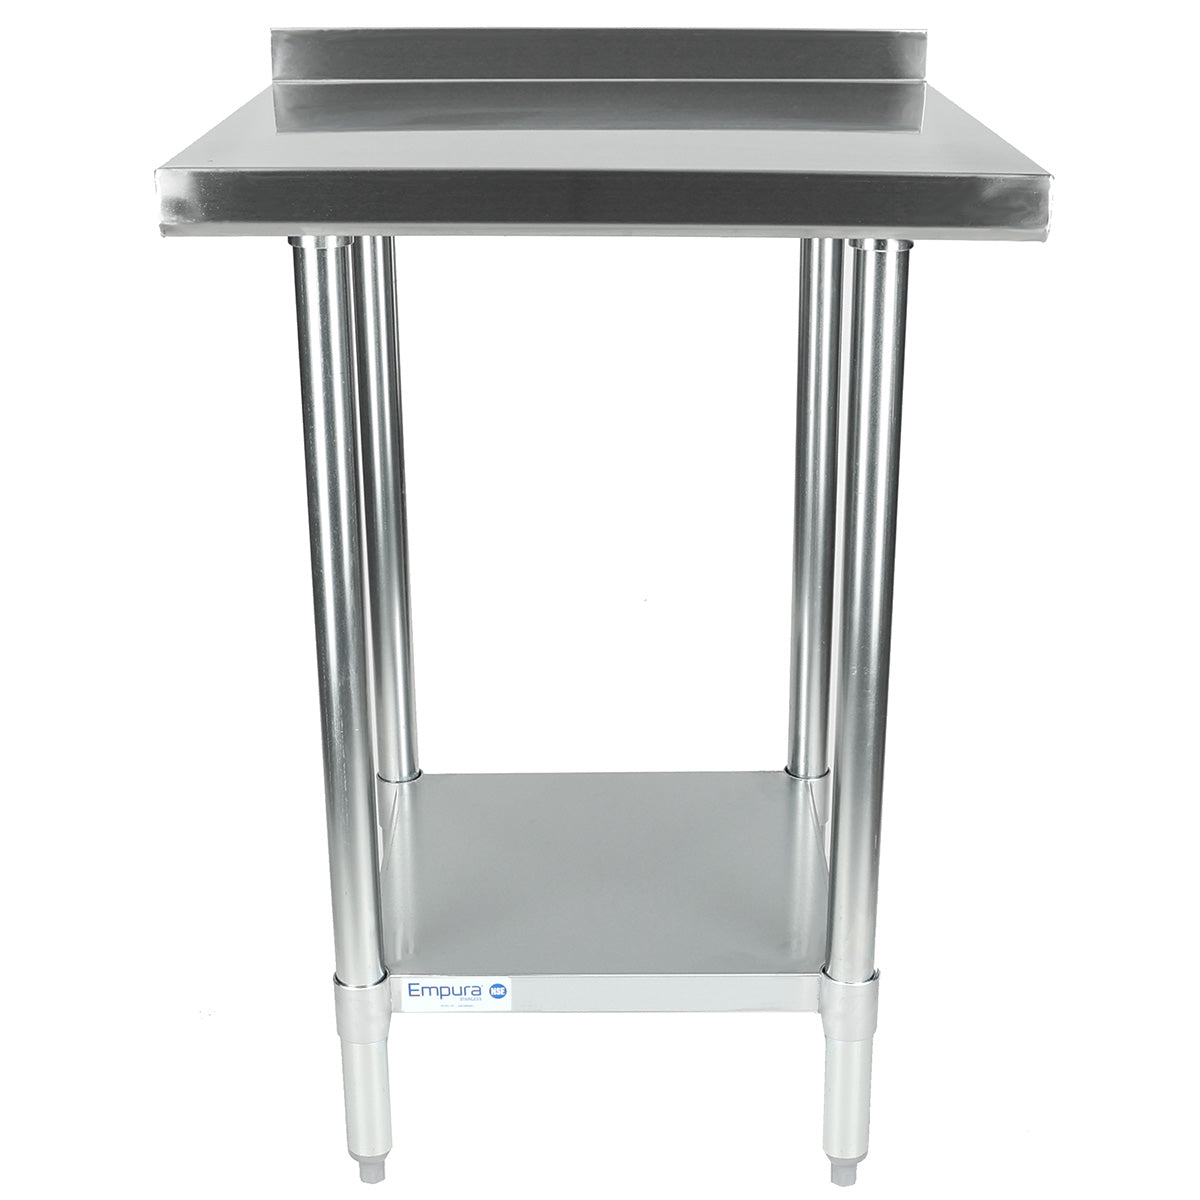 Empura 24" x 24" 18-Gauge 430 Stainless Steel Commercial Work Table with 2" Backsplash Galvanized Legs and Undershelf